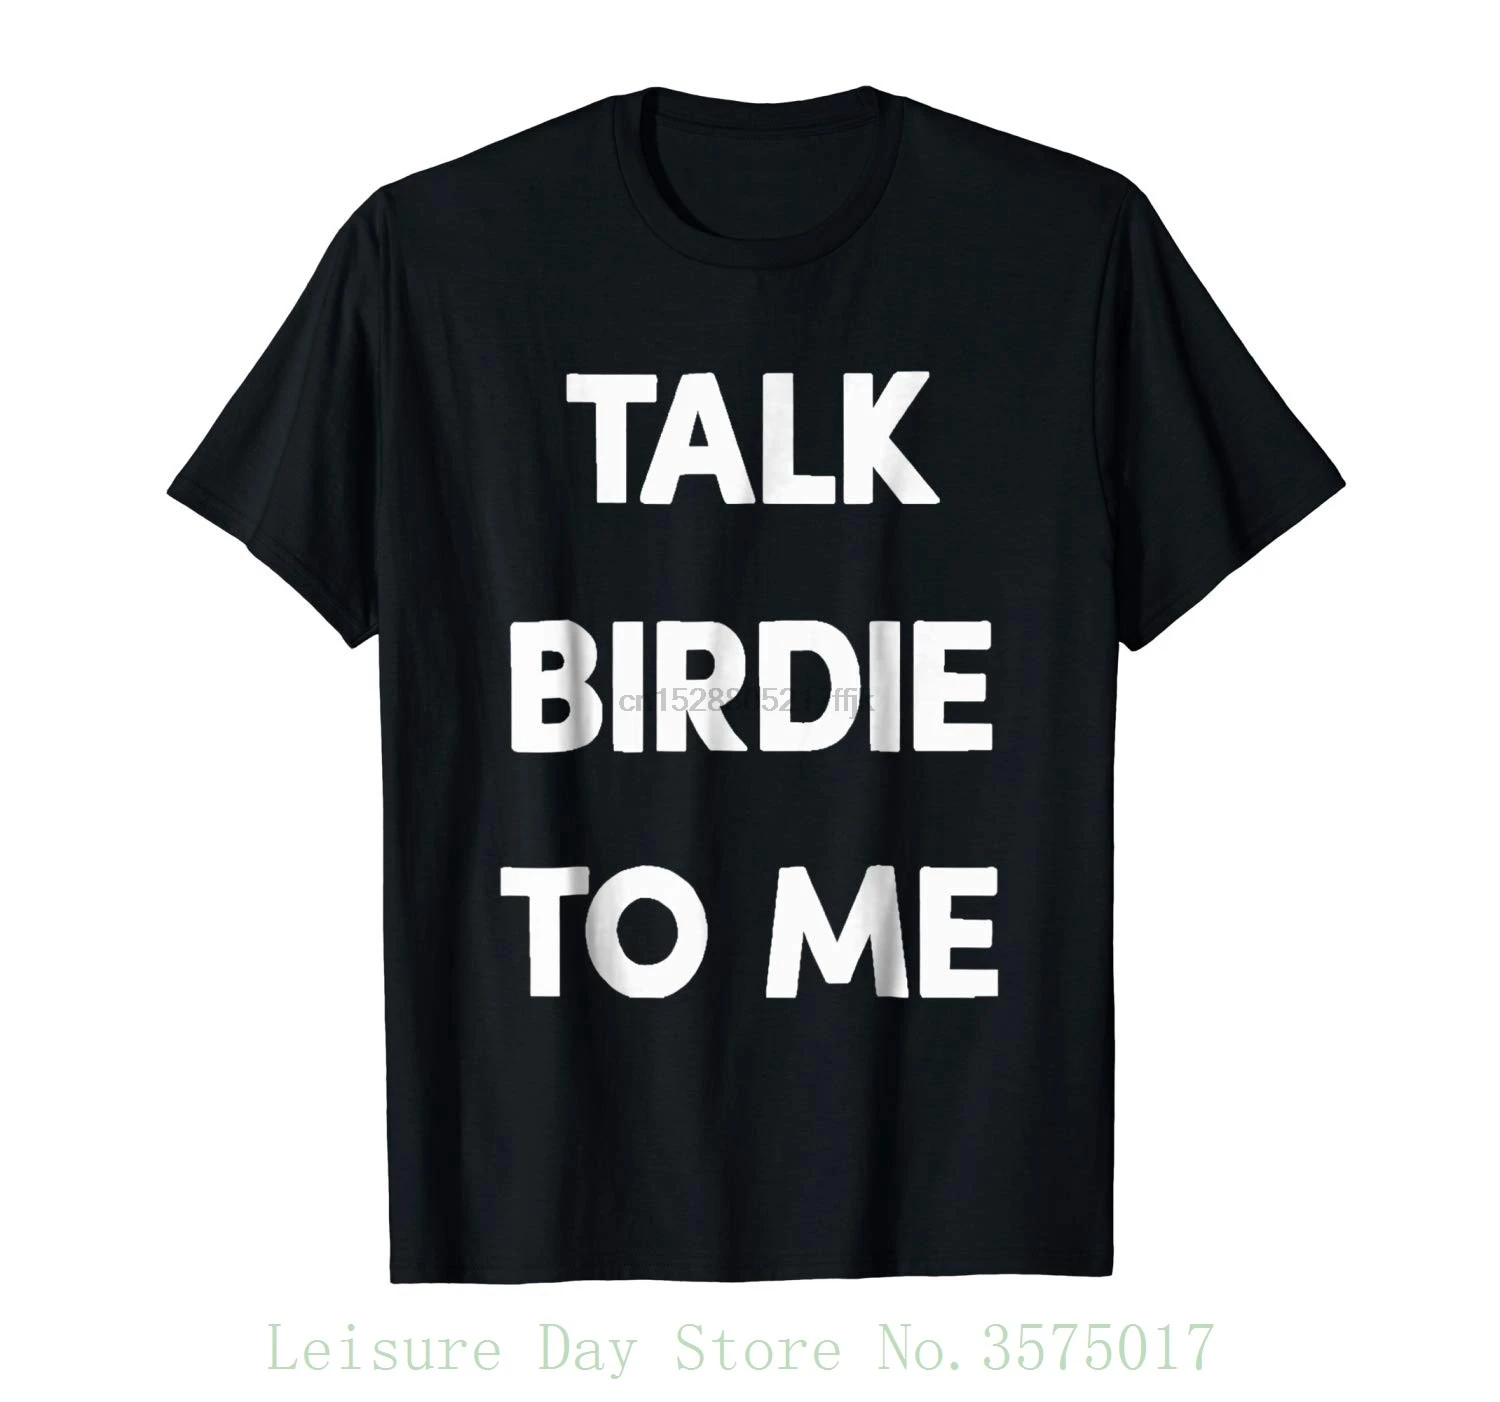 Talk Birdie To Me Футболка-забавная Футболка-Рождественский подарок идея футболка